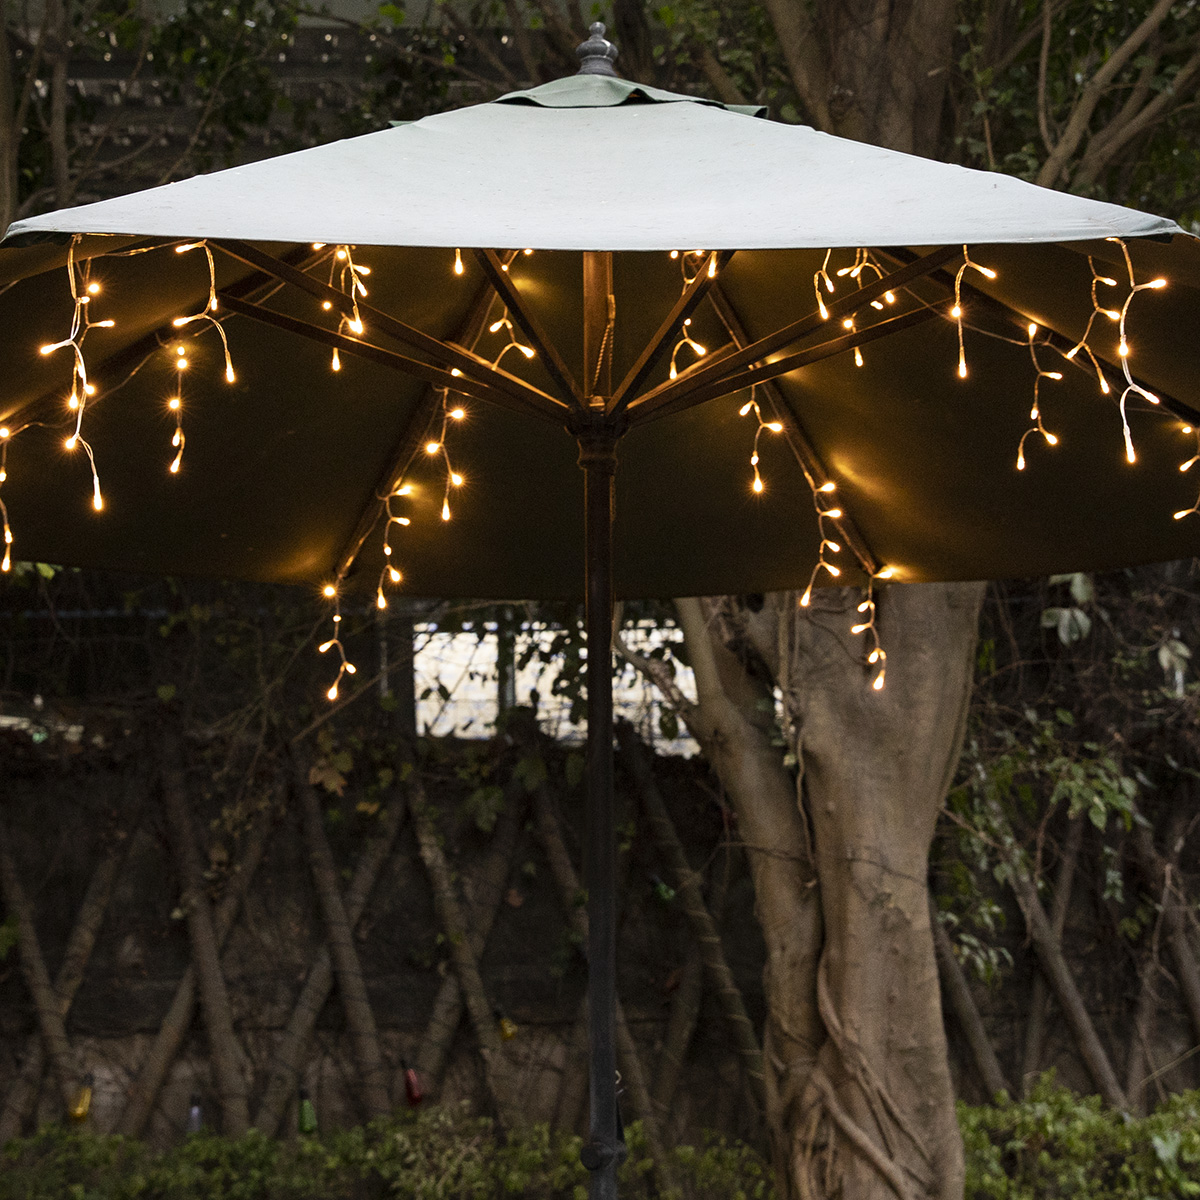 Solar Powered Umbrella Lights for Patio Umbrellas | ZHONGXIN Featured Image